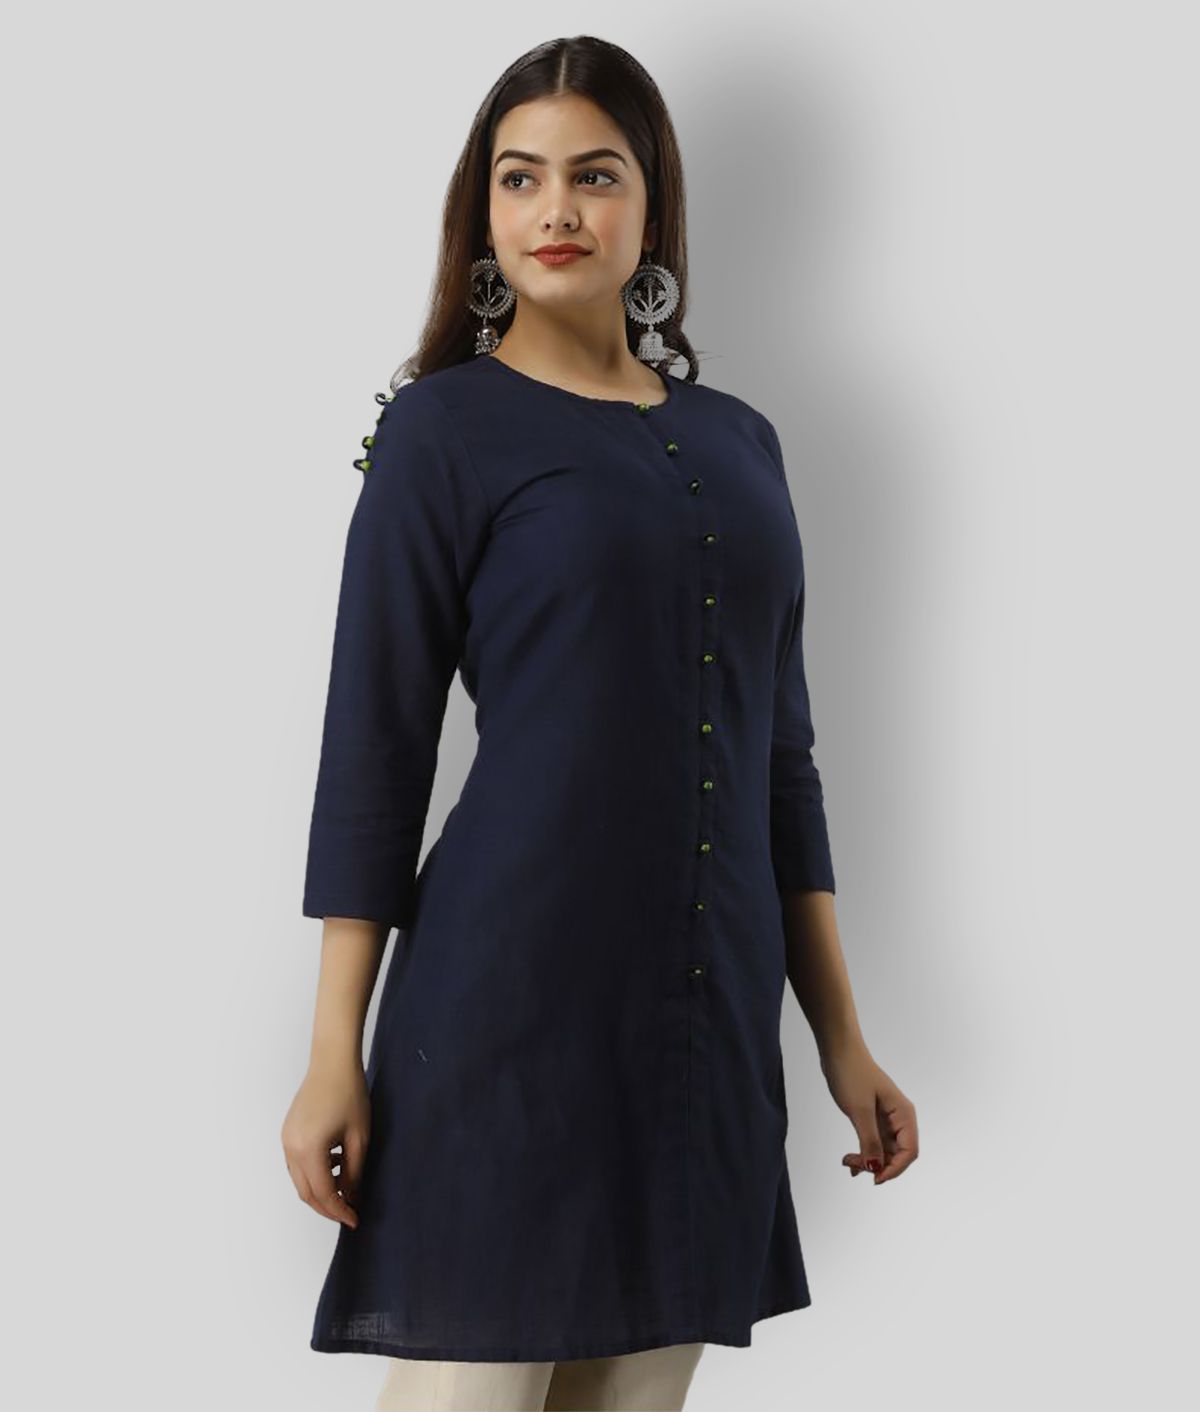     			SVARCHI - Navy Blue Cotton Women's Tunic ( Pack of 1 )